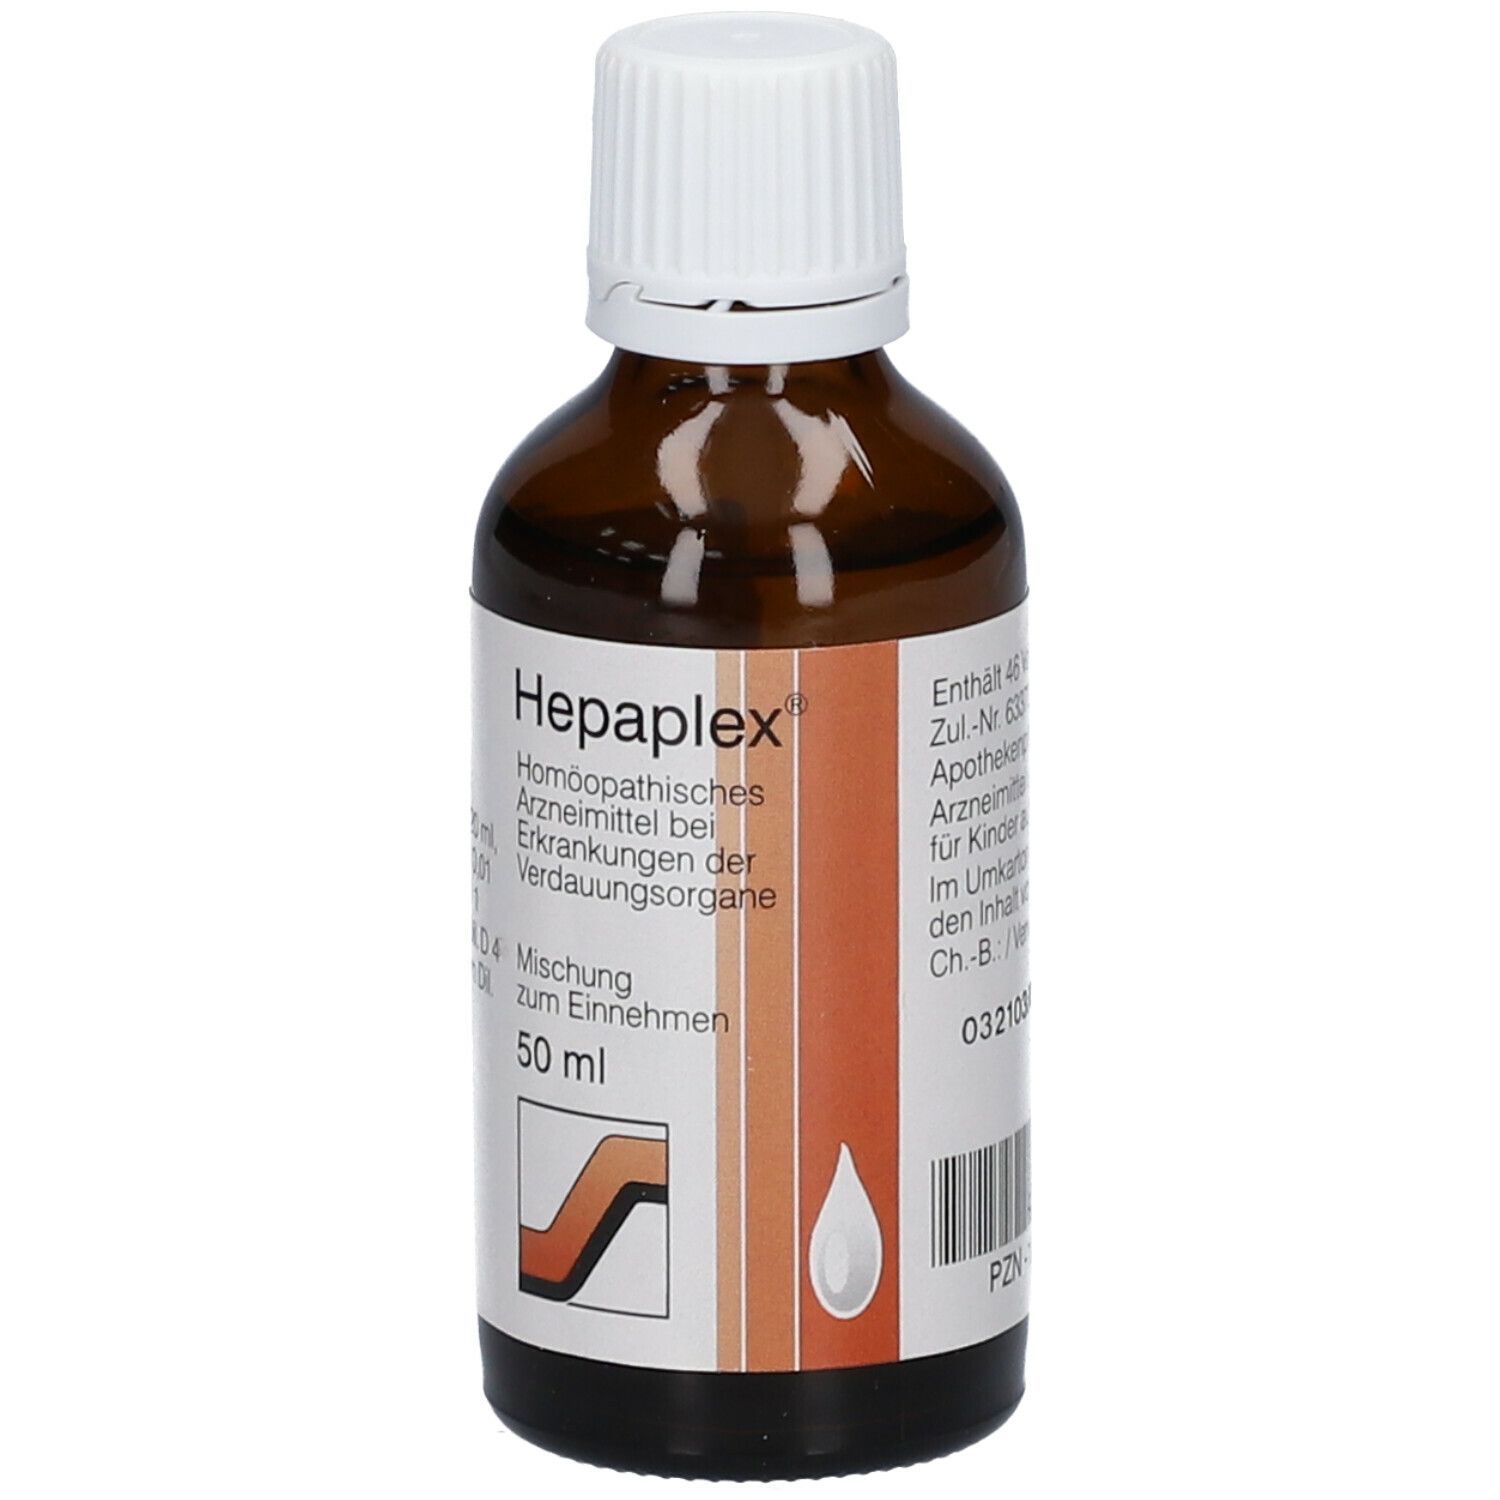 Hepaplex®